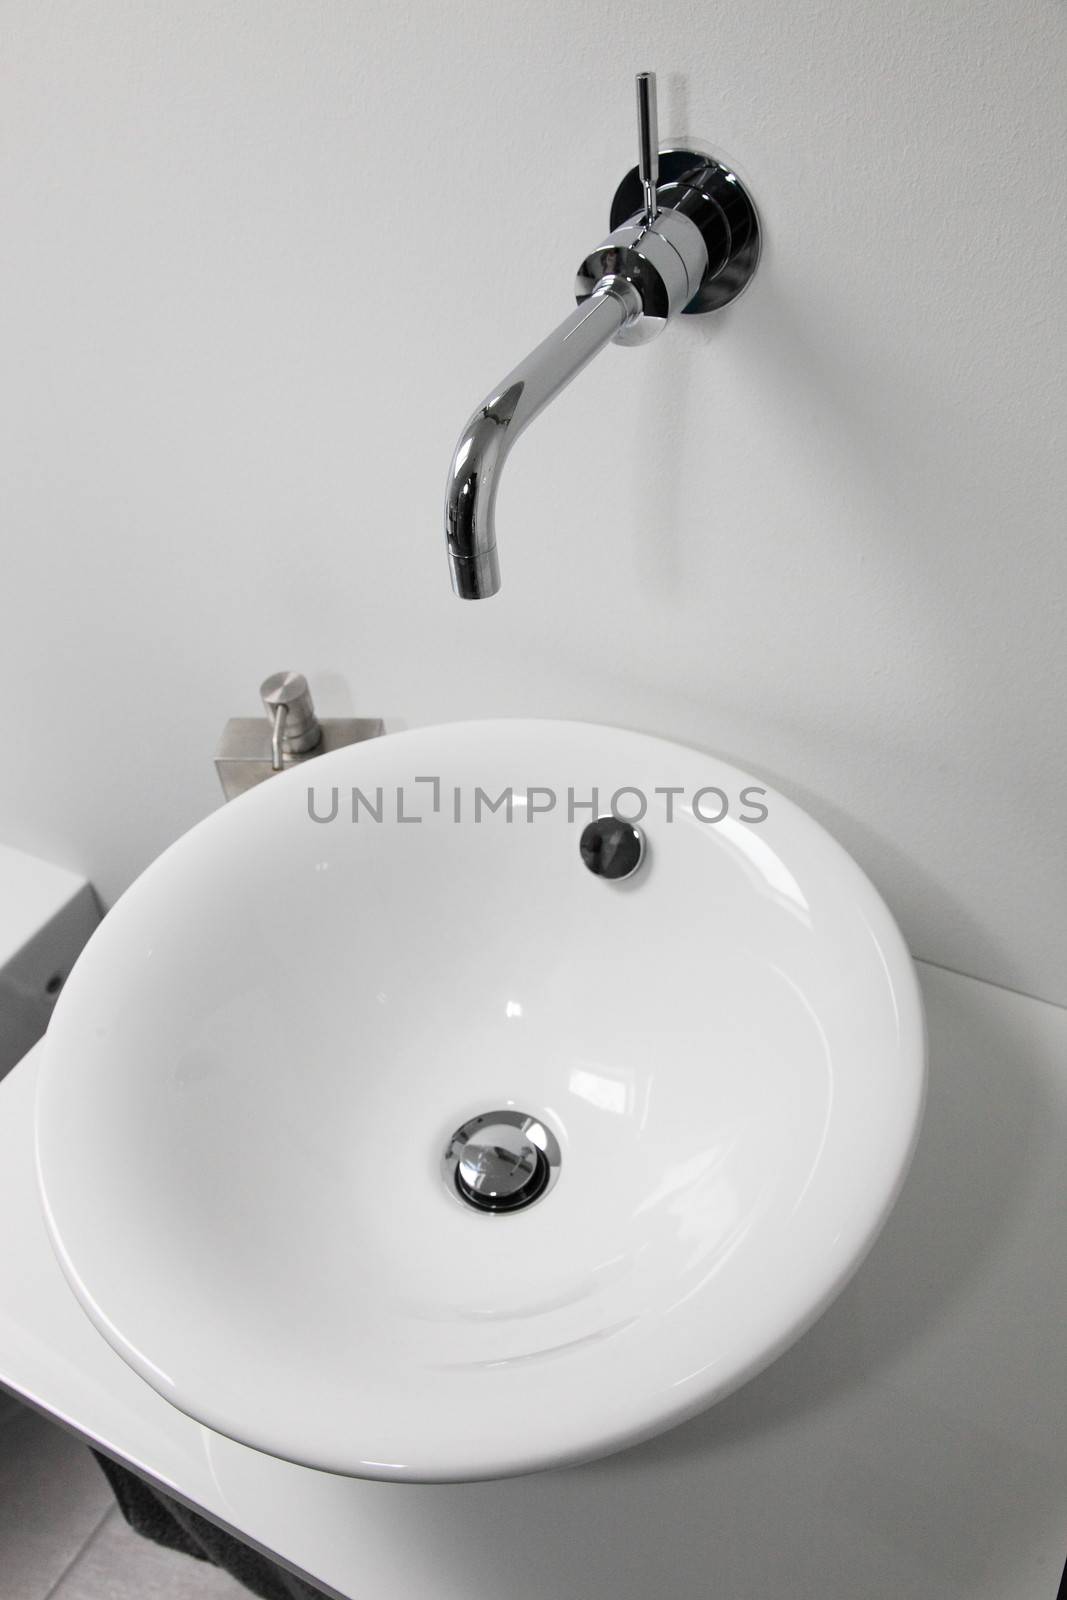 Modern handbasin and tap by Farina6000